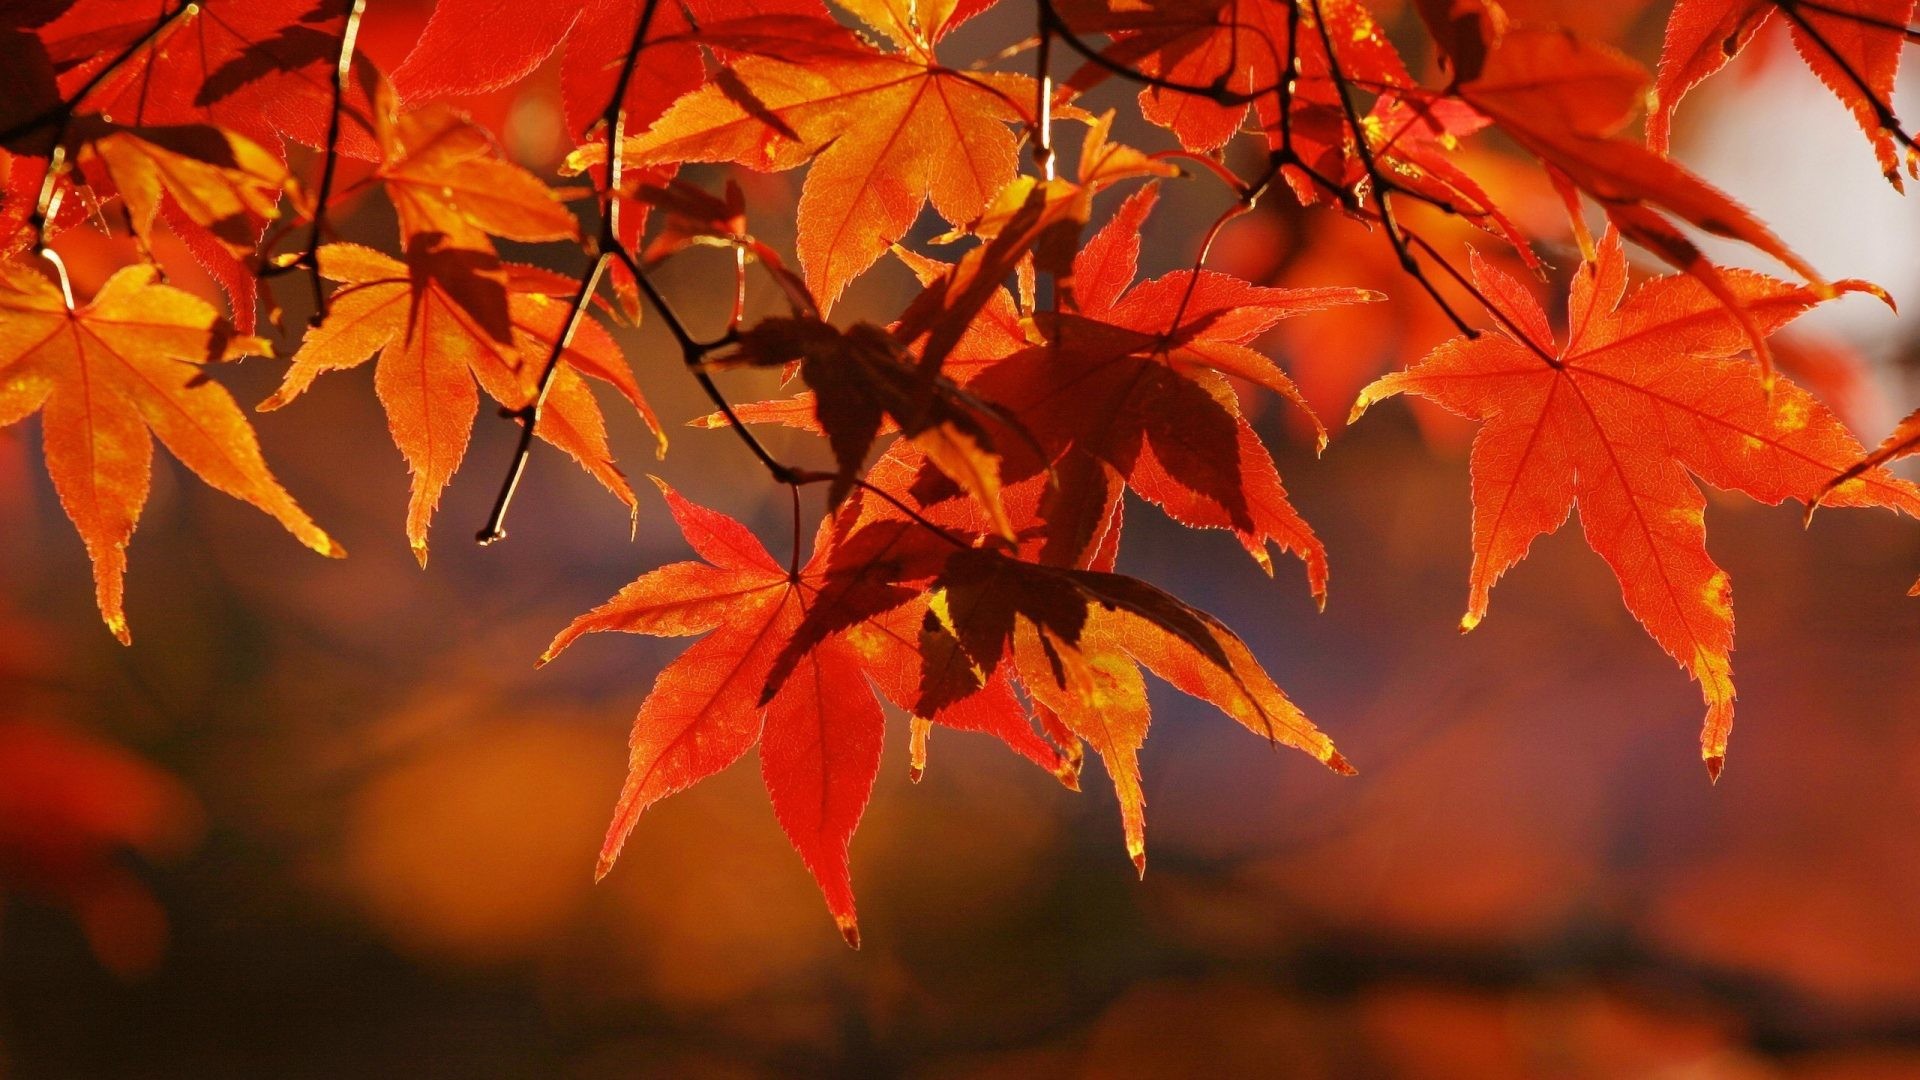 1920x1080 Fall Tag - Fall Leaves Season Autumn Colors Tree Free Desktop Wallpaper for  HD 16: